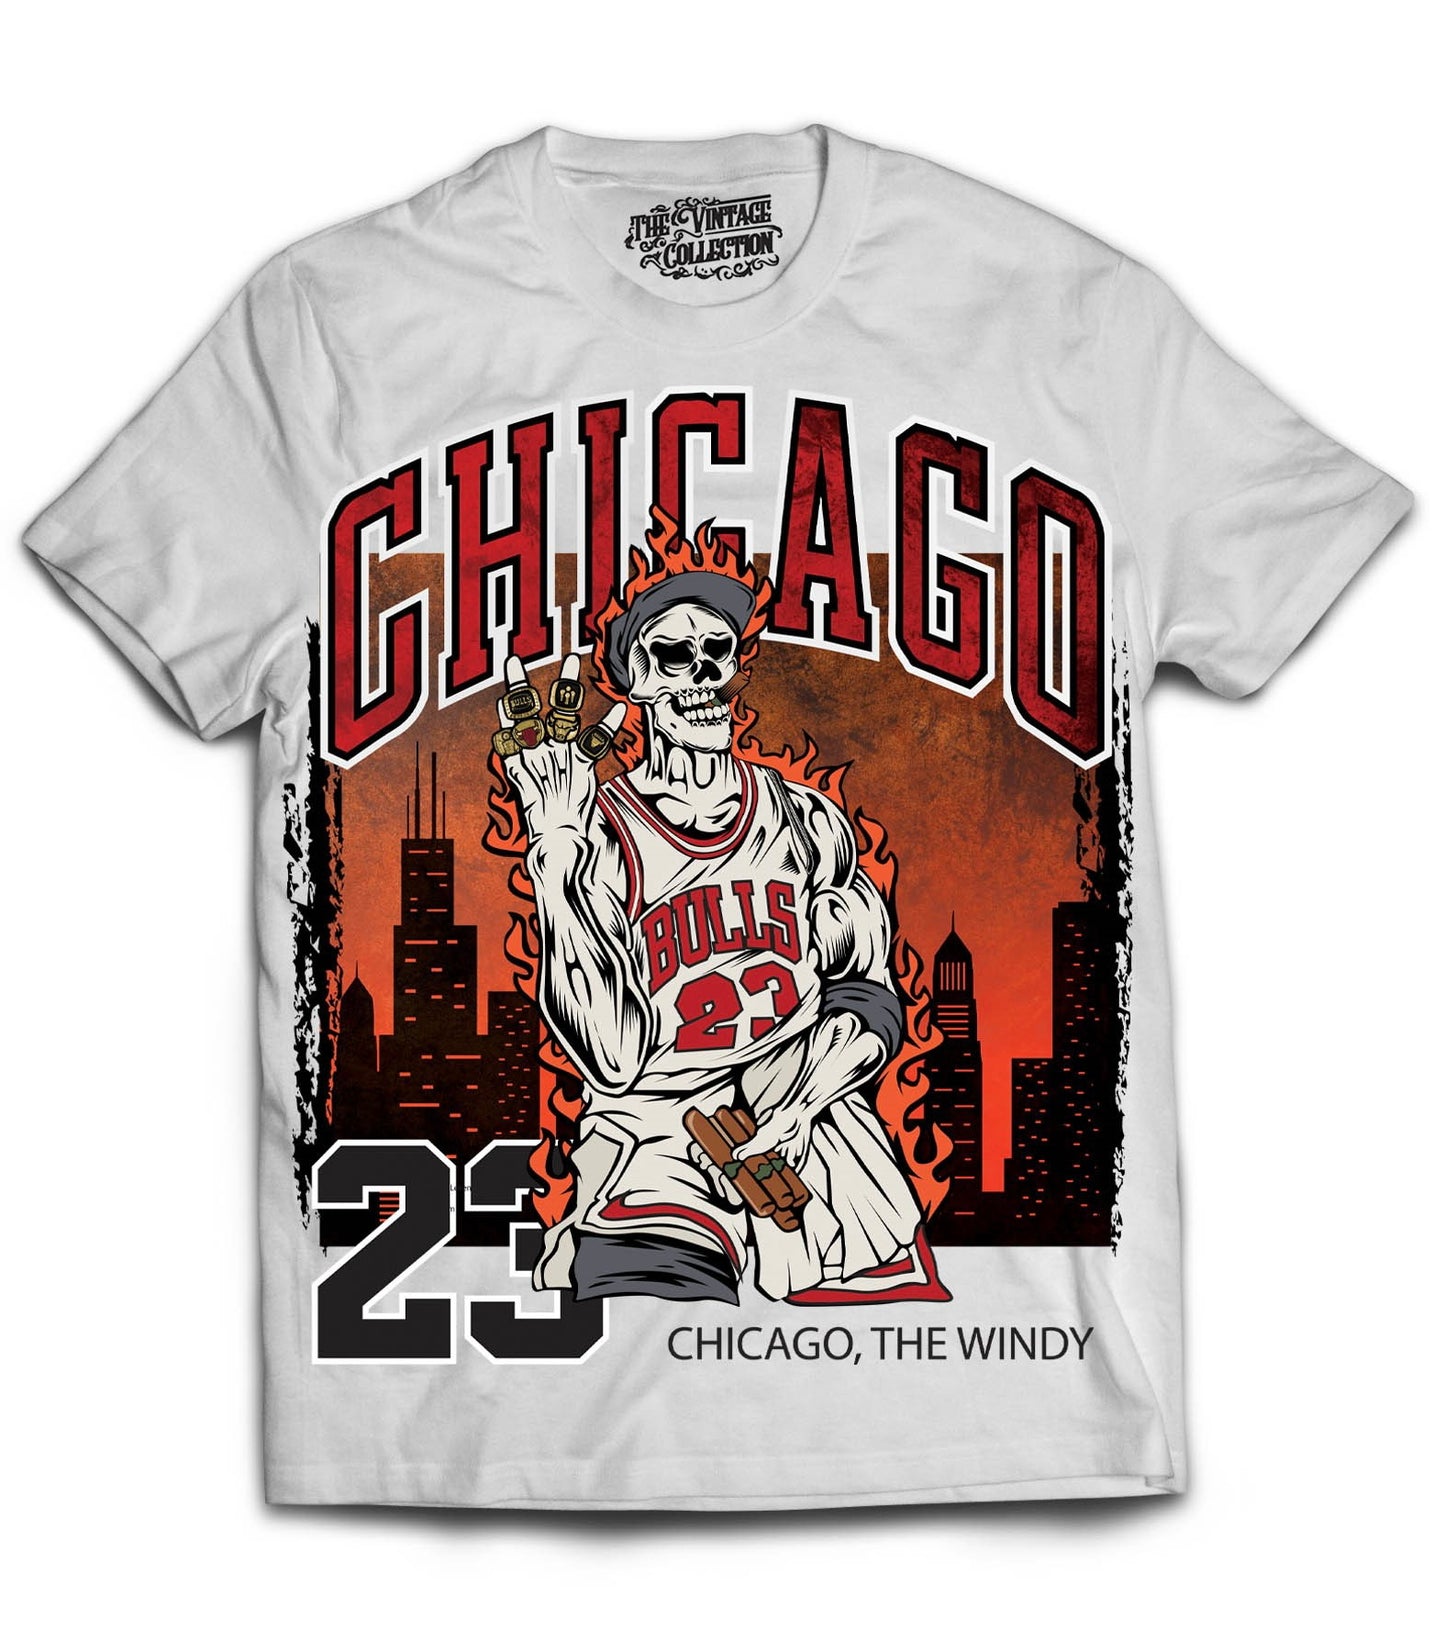 Chicago Rings Shirt *Skeleton Edition* (White)